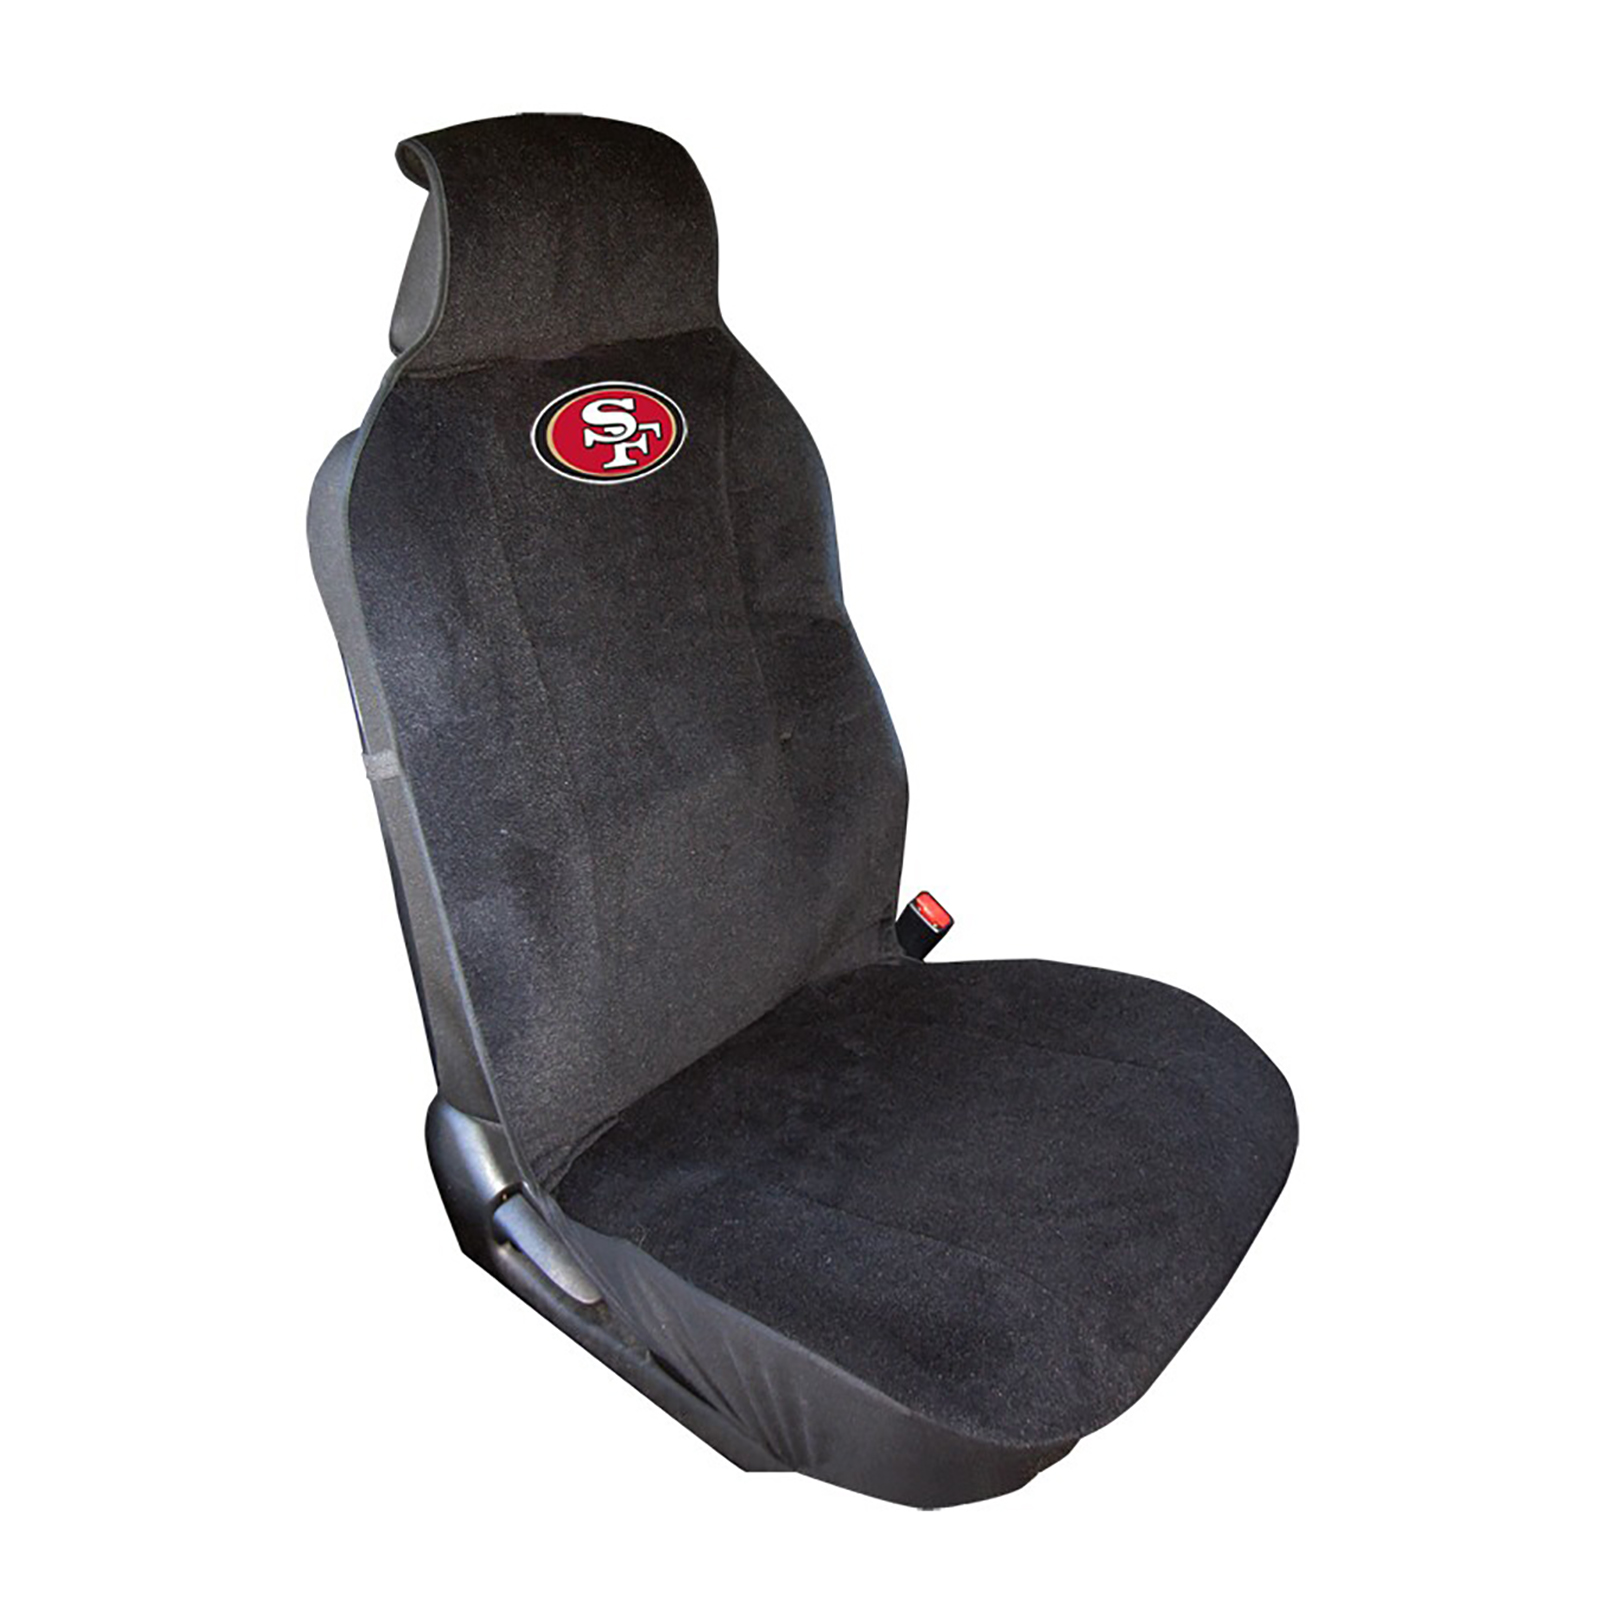 Fremont Die San Francisco 49ers Car Seat Cover